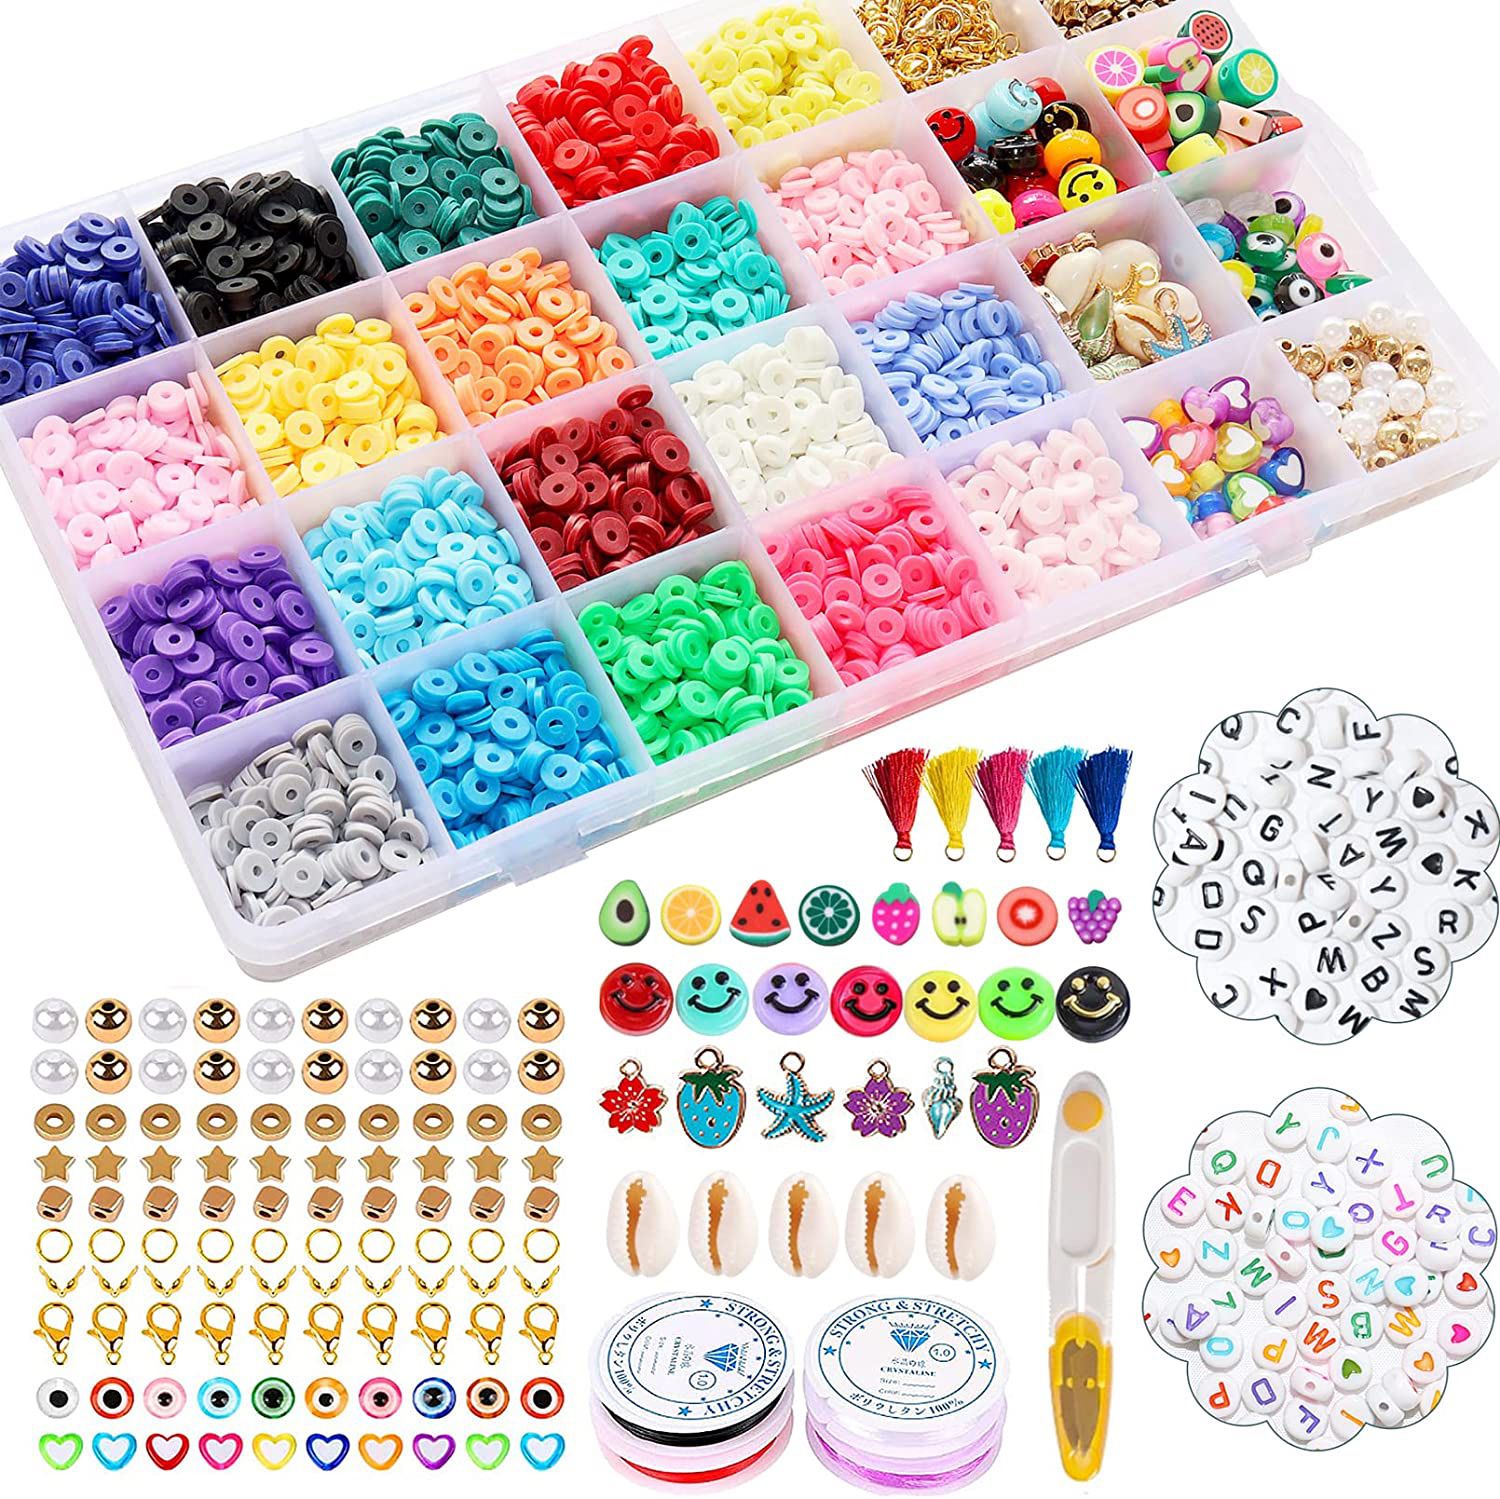 New 4650Pcs Clay Beads Jewelry Making Kit